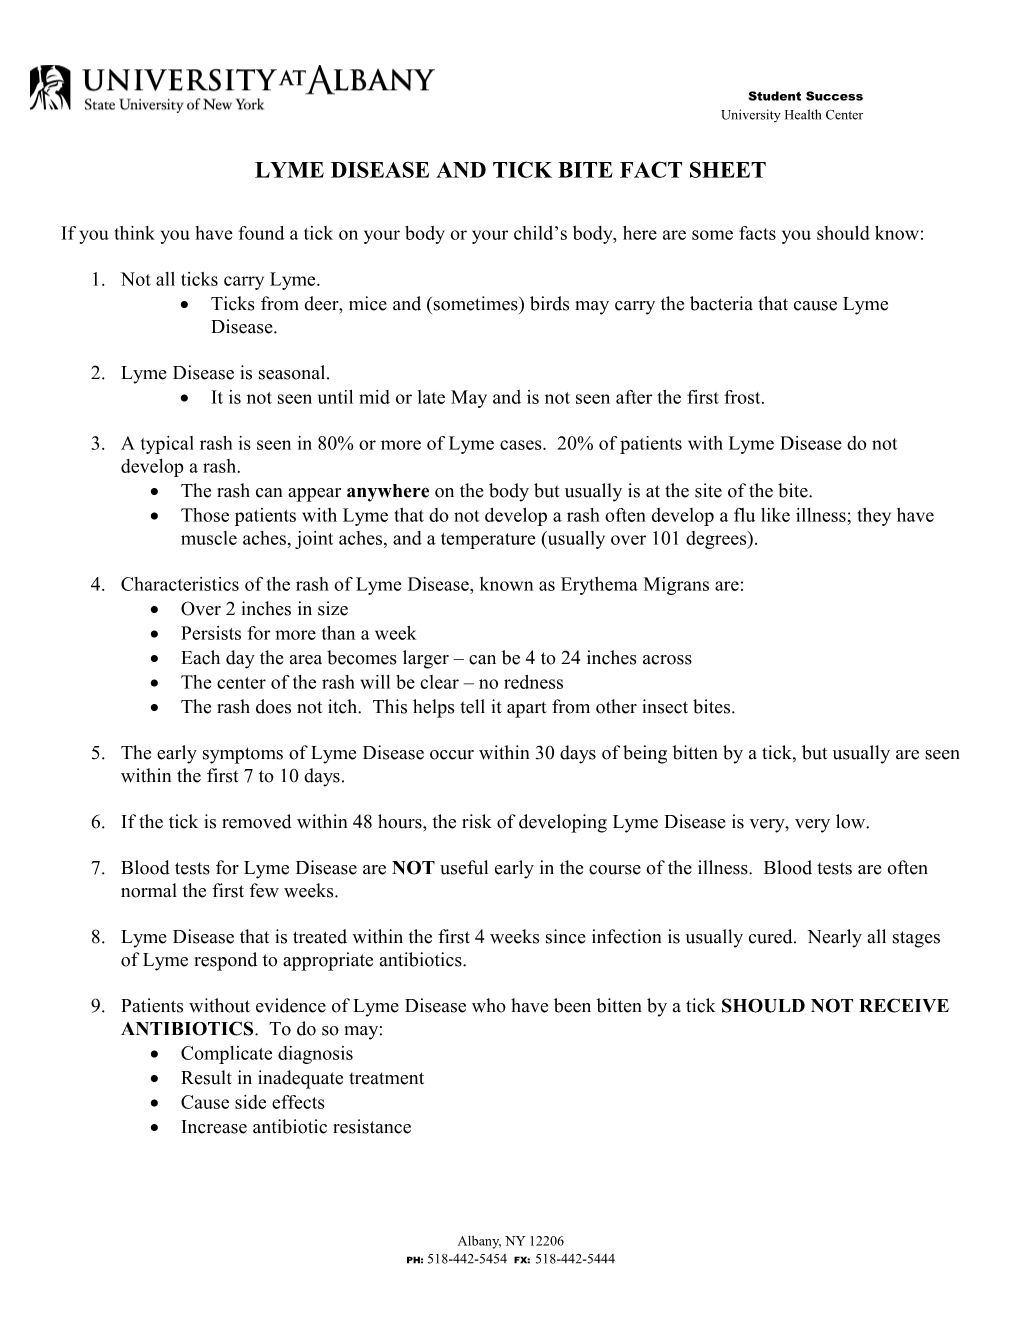 Lyme Disease and Tick Bite Fact Sheet